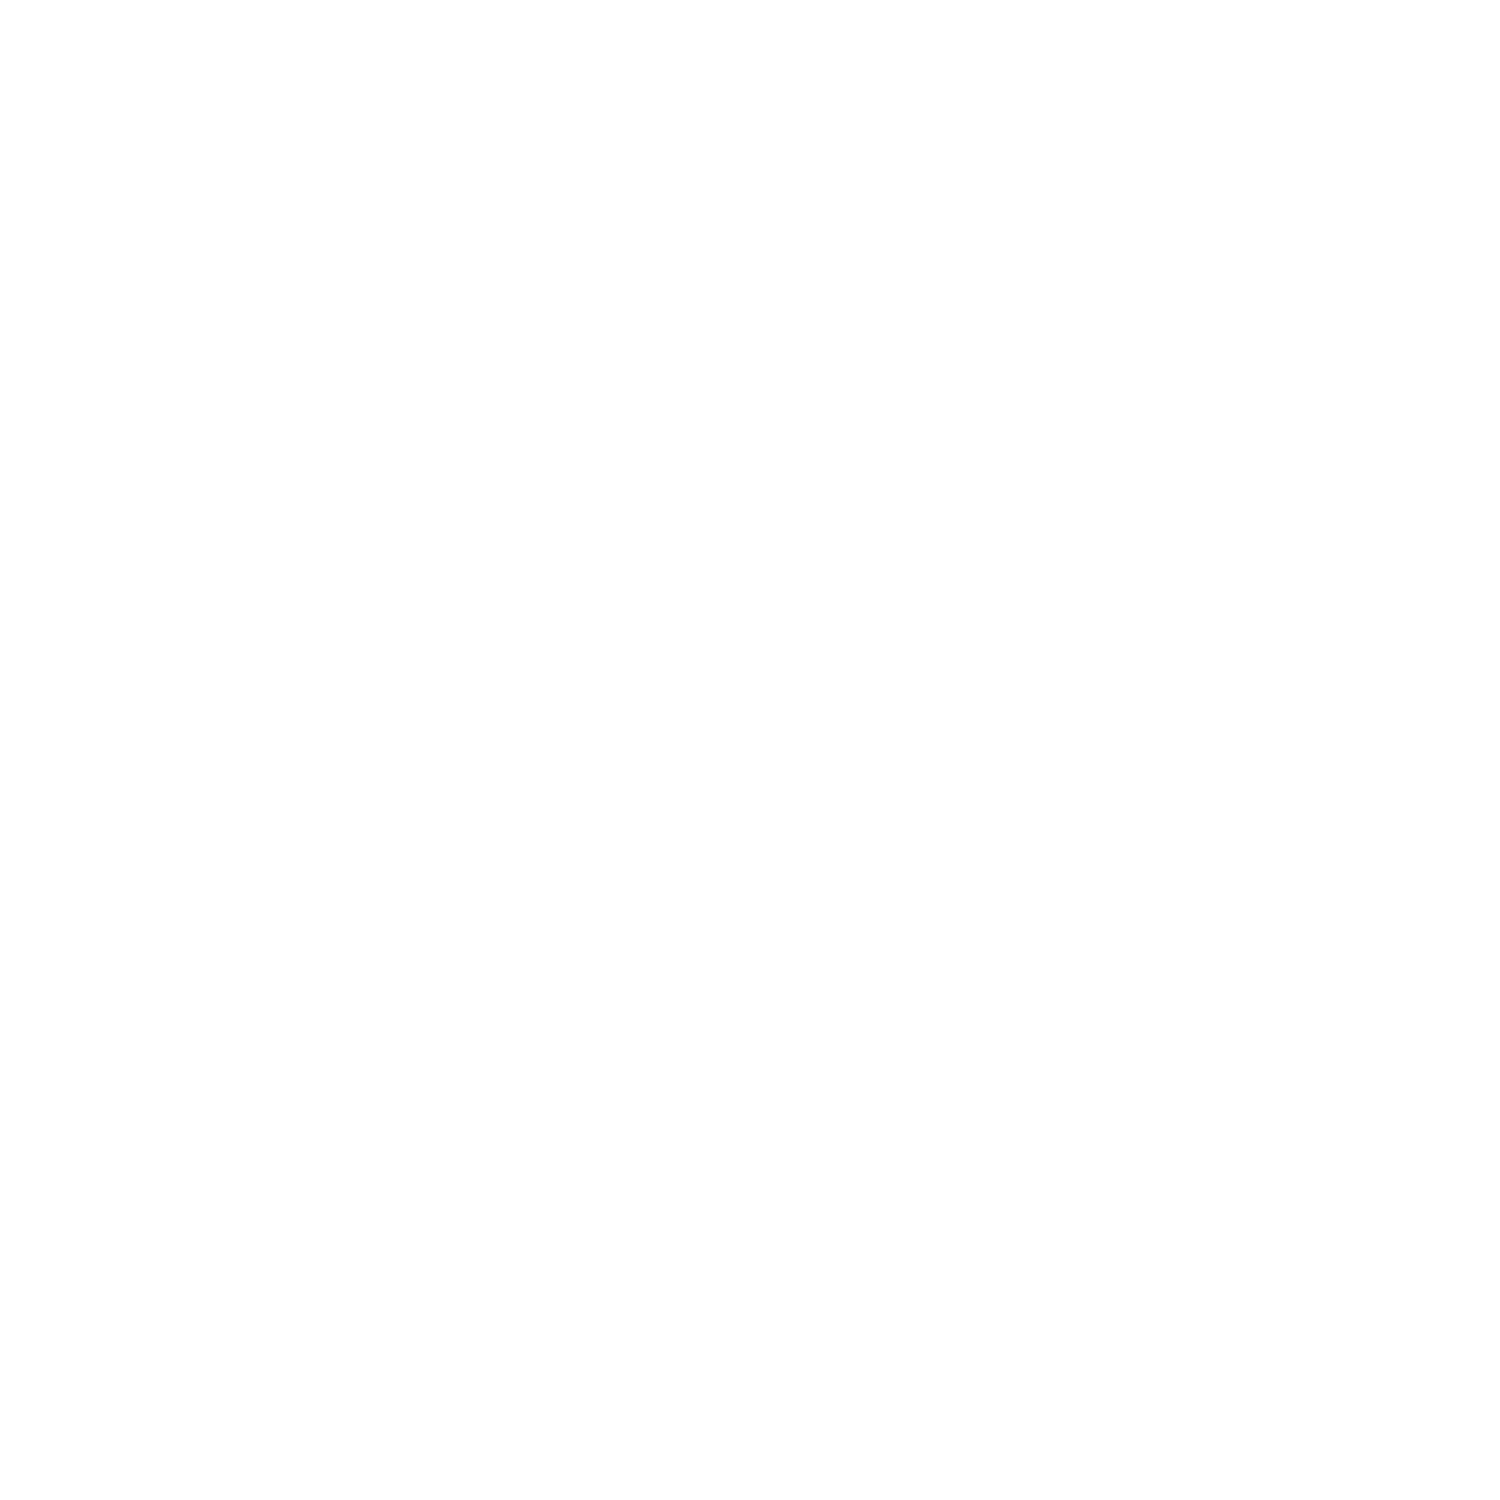 608-records